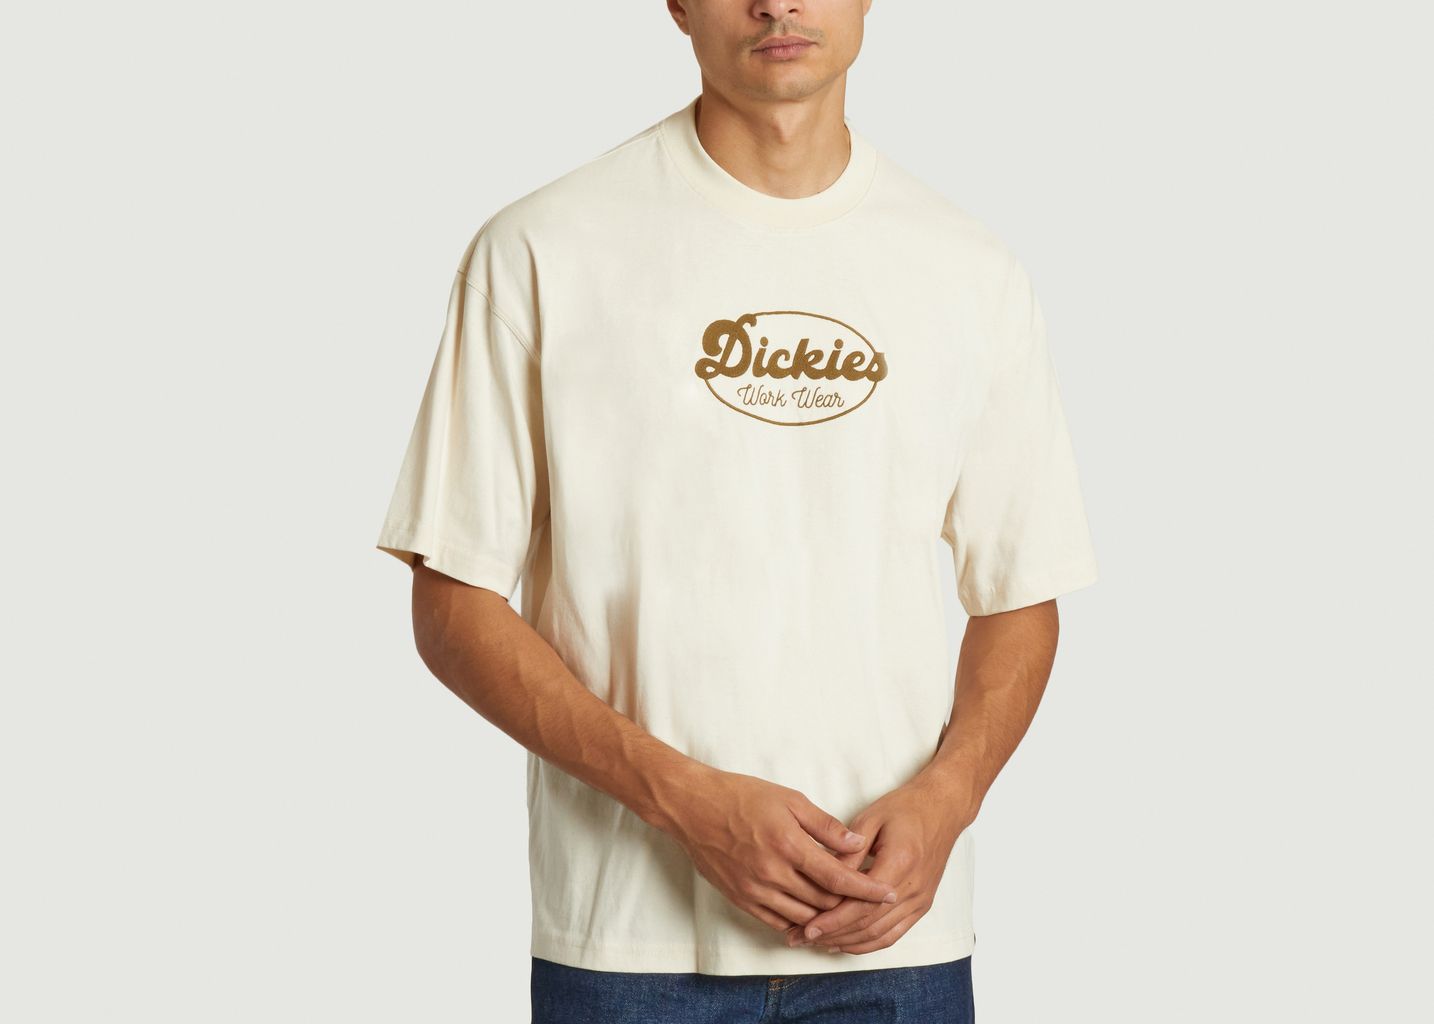 Gridley short-sleeved T-shirt - Dickies